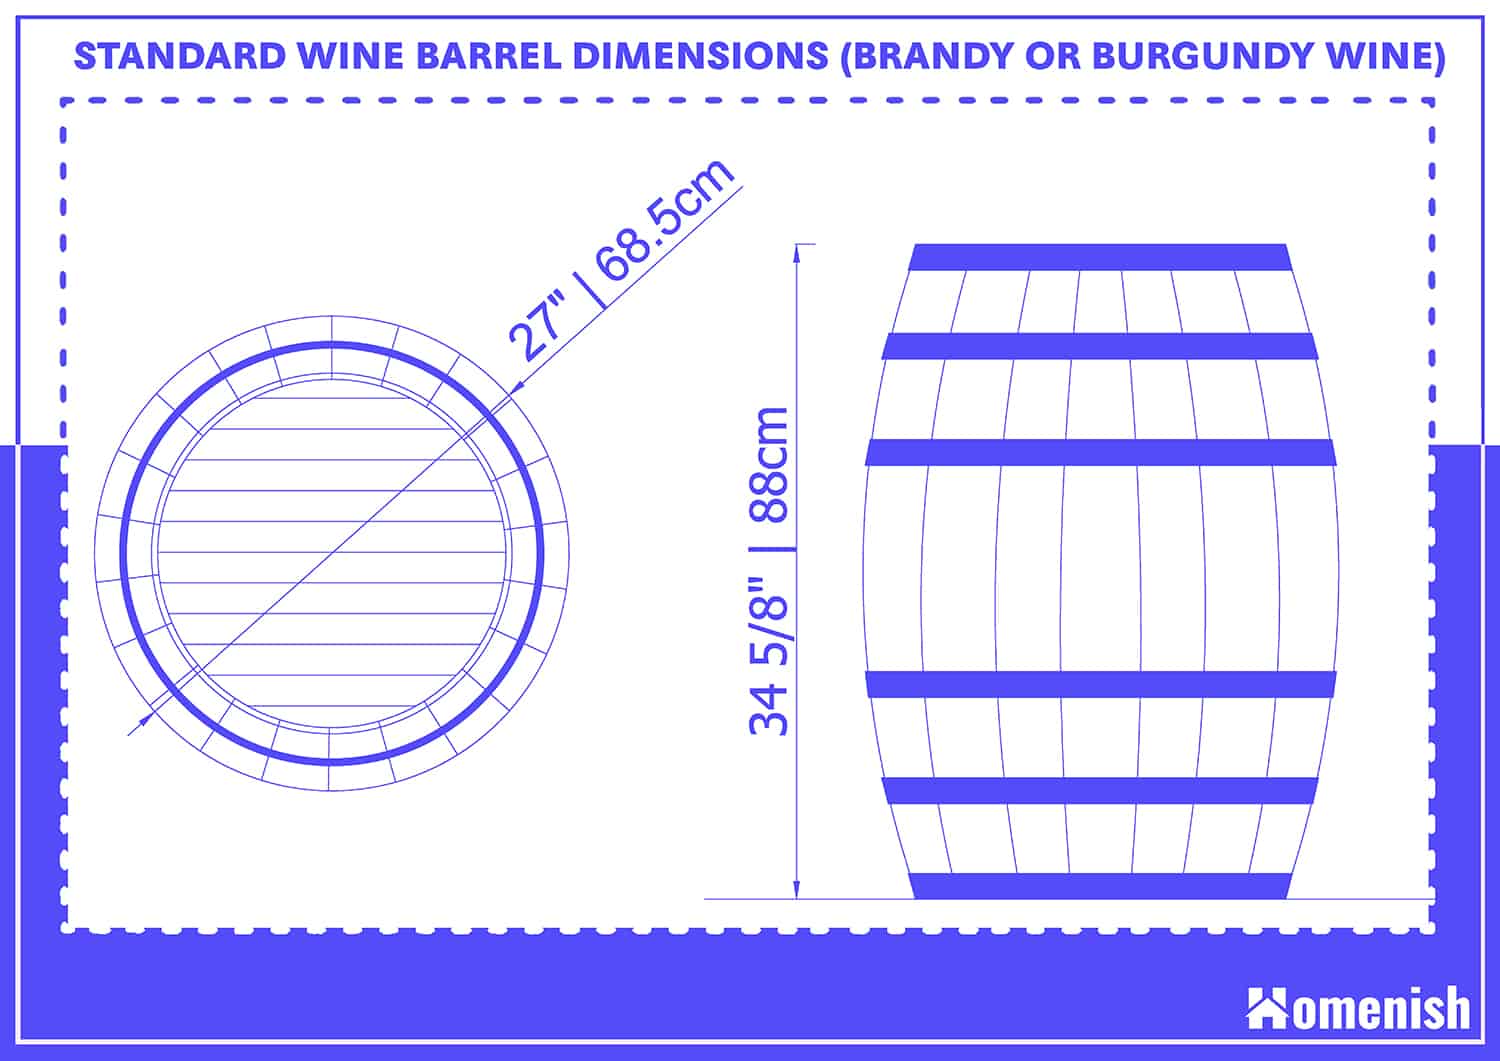 Standard Wine Barrel Dimensions (Burgundy Barrel)